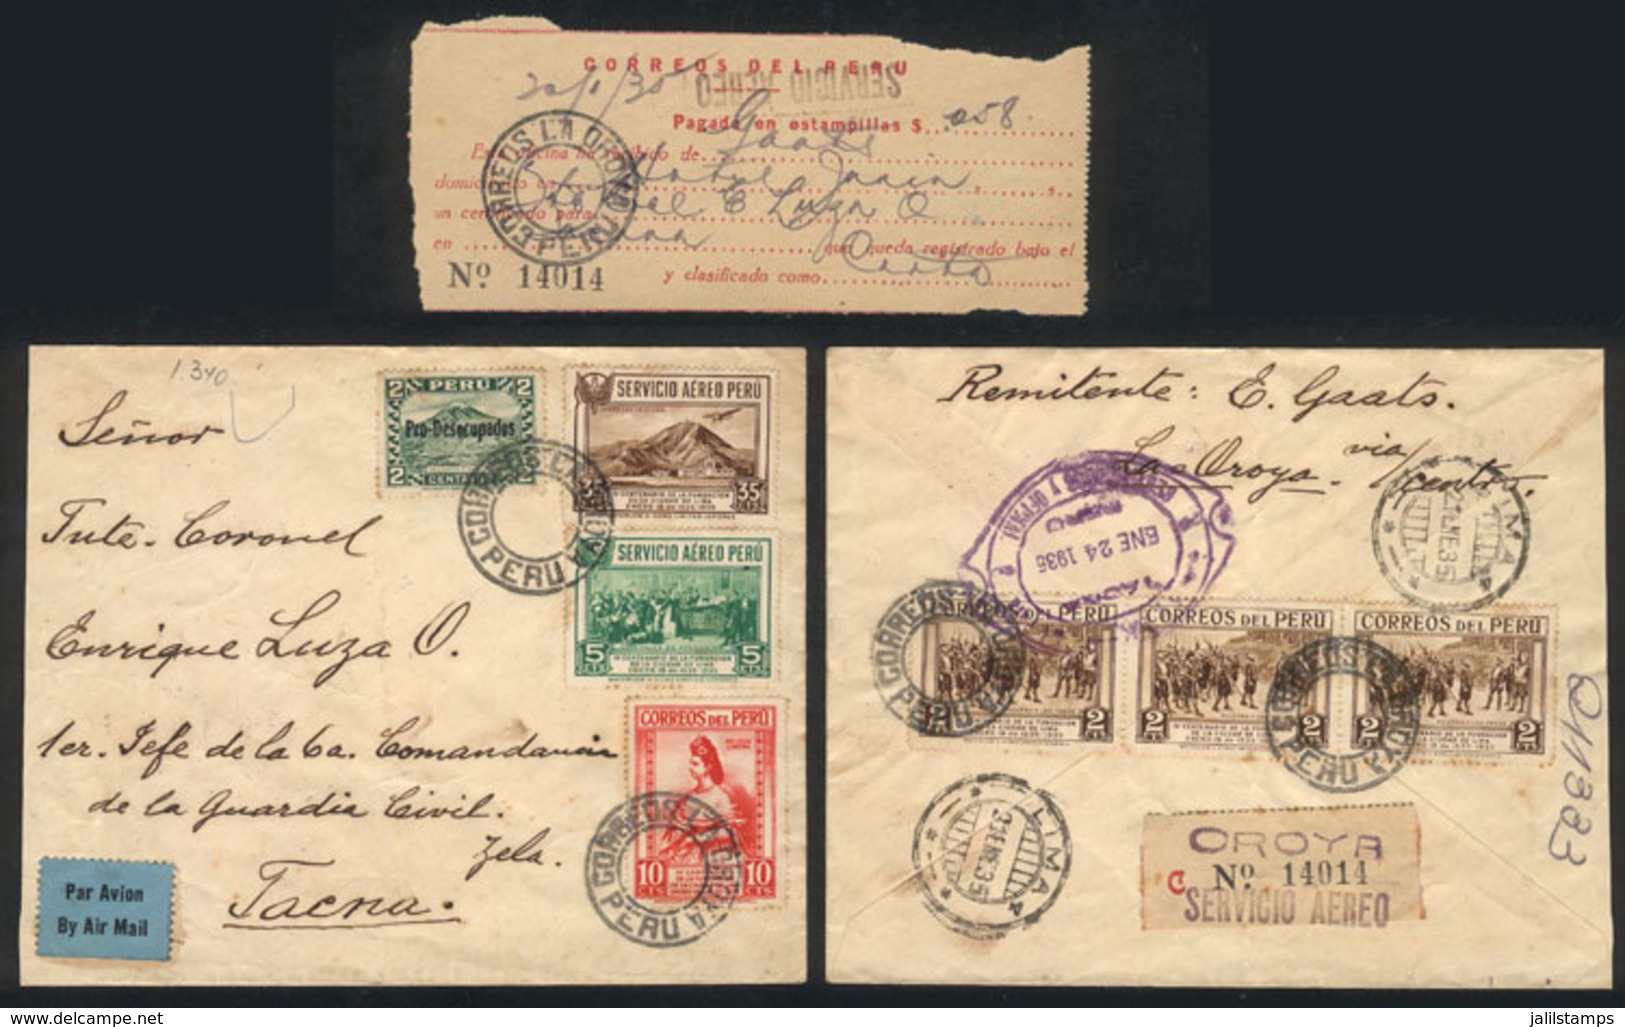 PERU: 20/JA/1935 Oroya - Tacna Via Lima, Registered Airmail Cover With 56c. Postage (1c. Extra) + 2c. Cinderella, With T - Perú